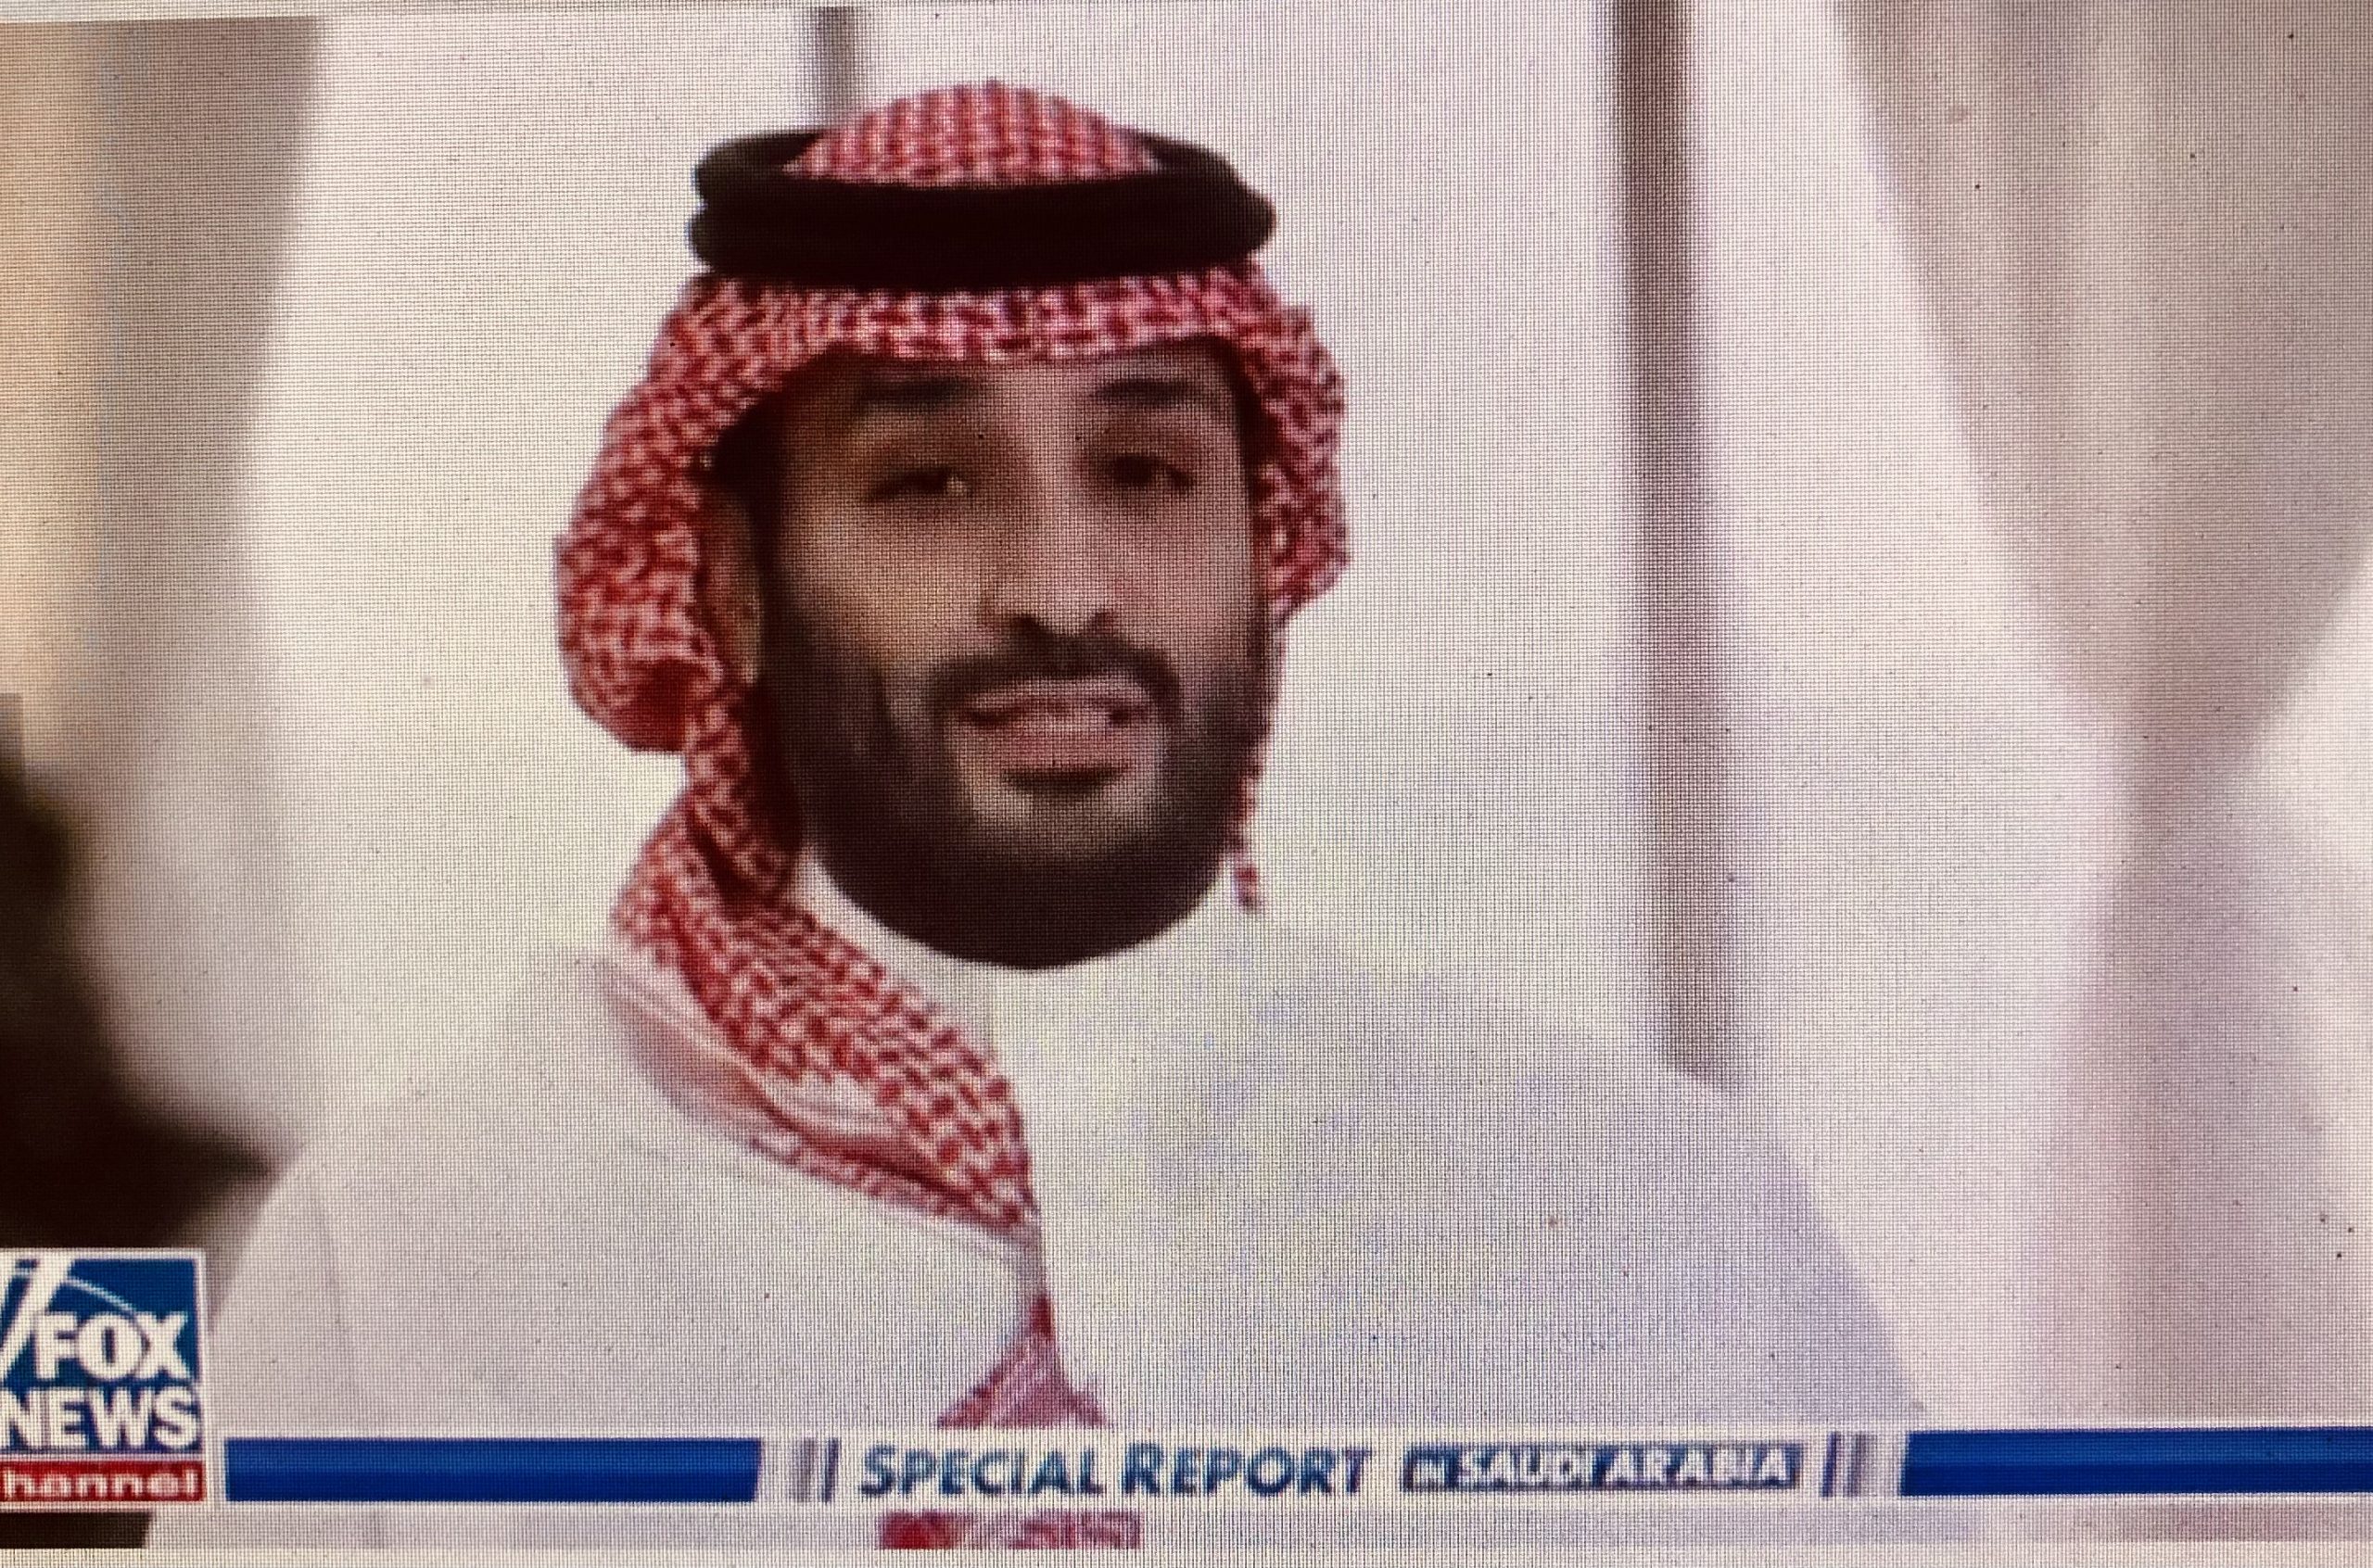 Saudi Crown Prince - bin salman - Mohammed ben Salmane